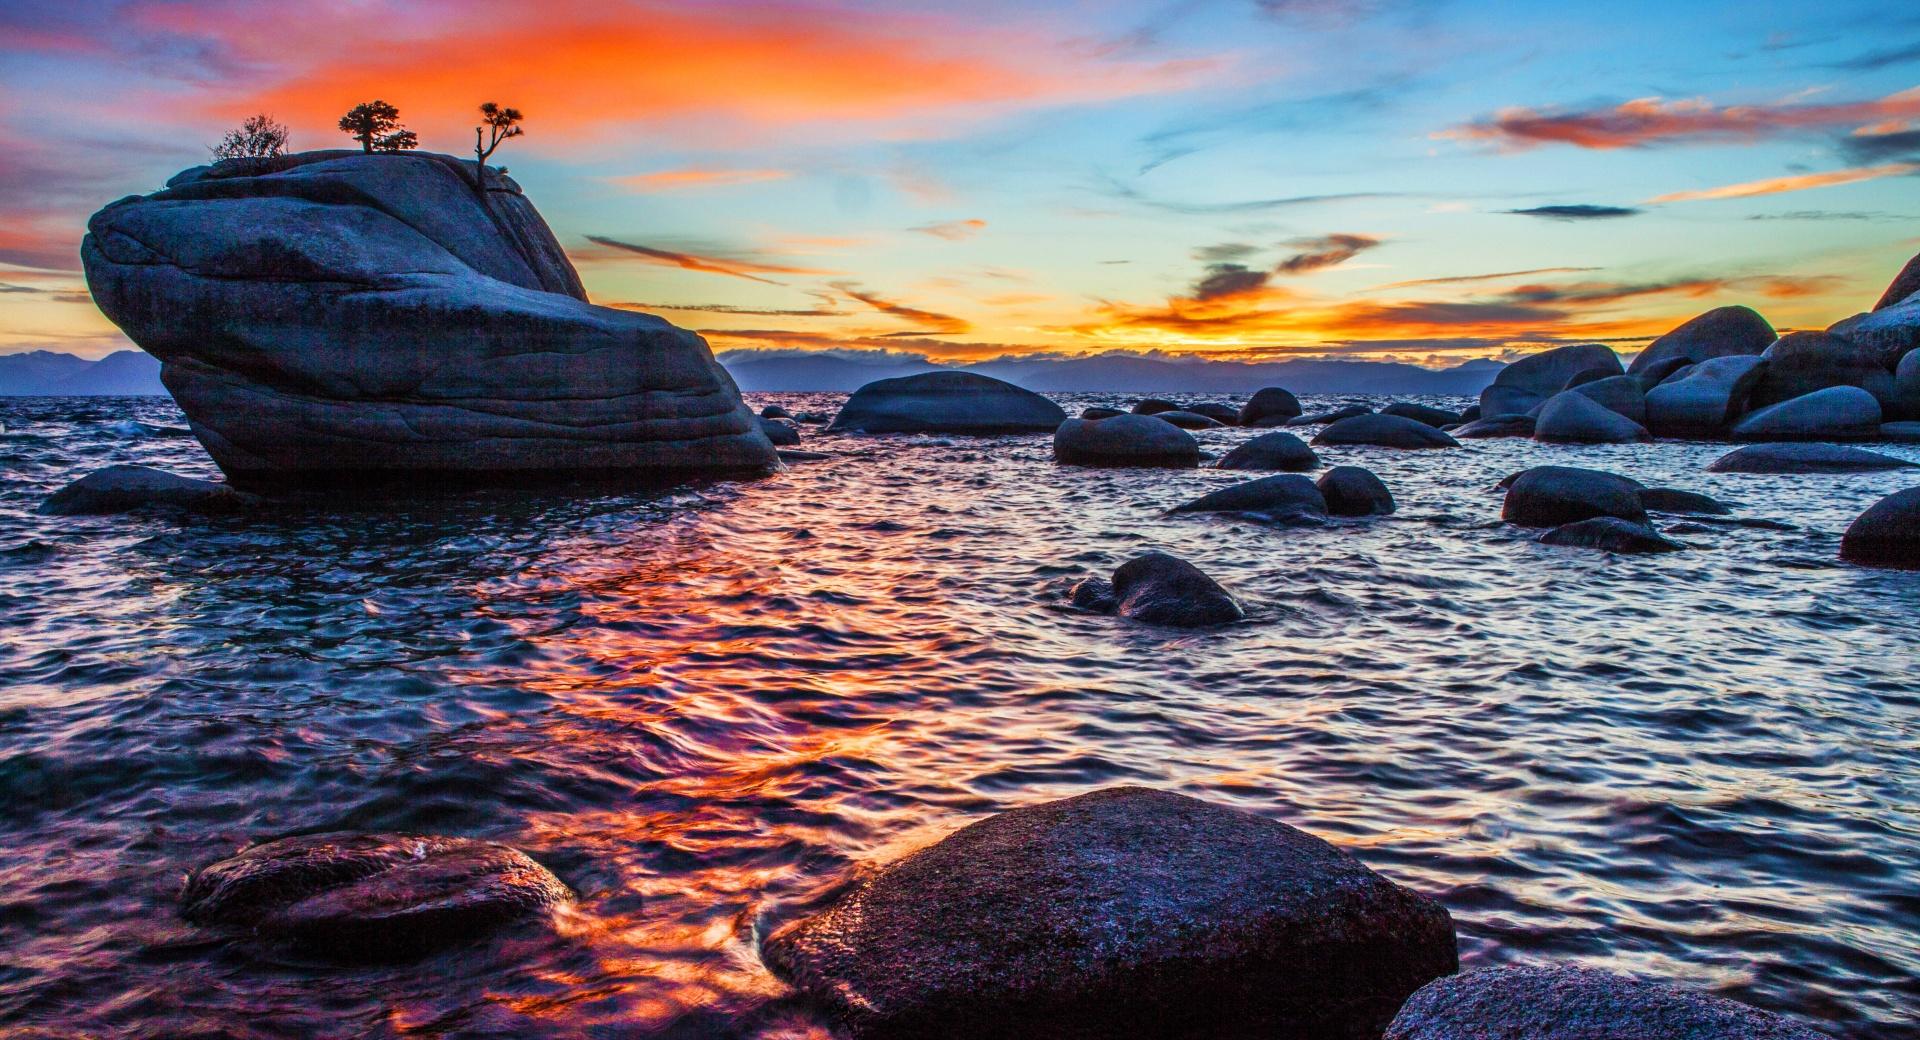 Bonsai Rock Sunset at Lake Tahoe at 2048 x 2048 iPad size wallpapers HD quality